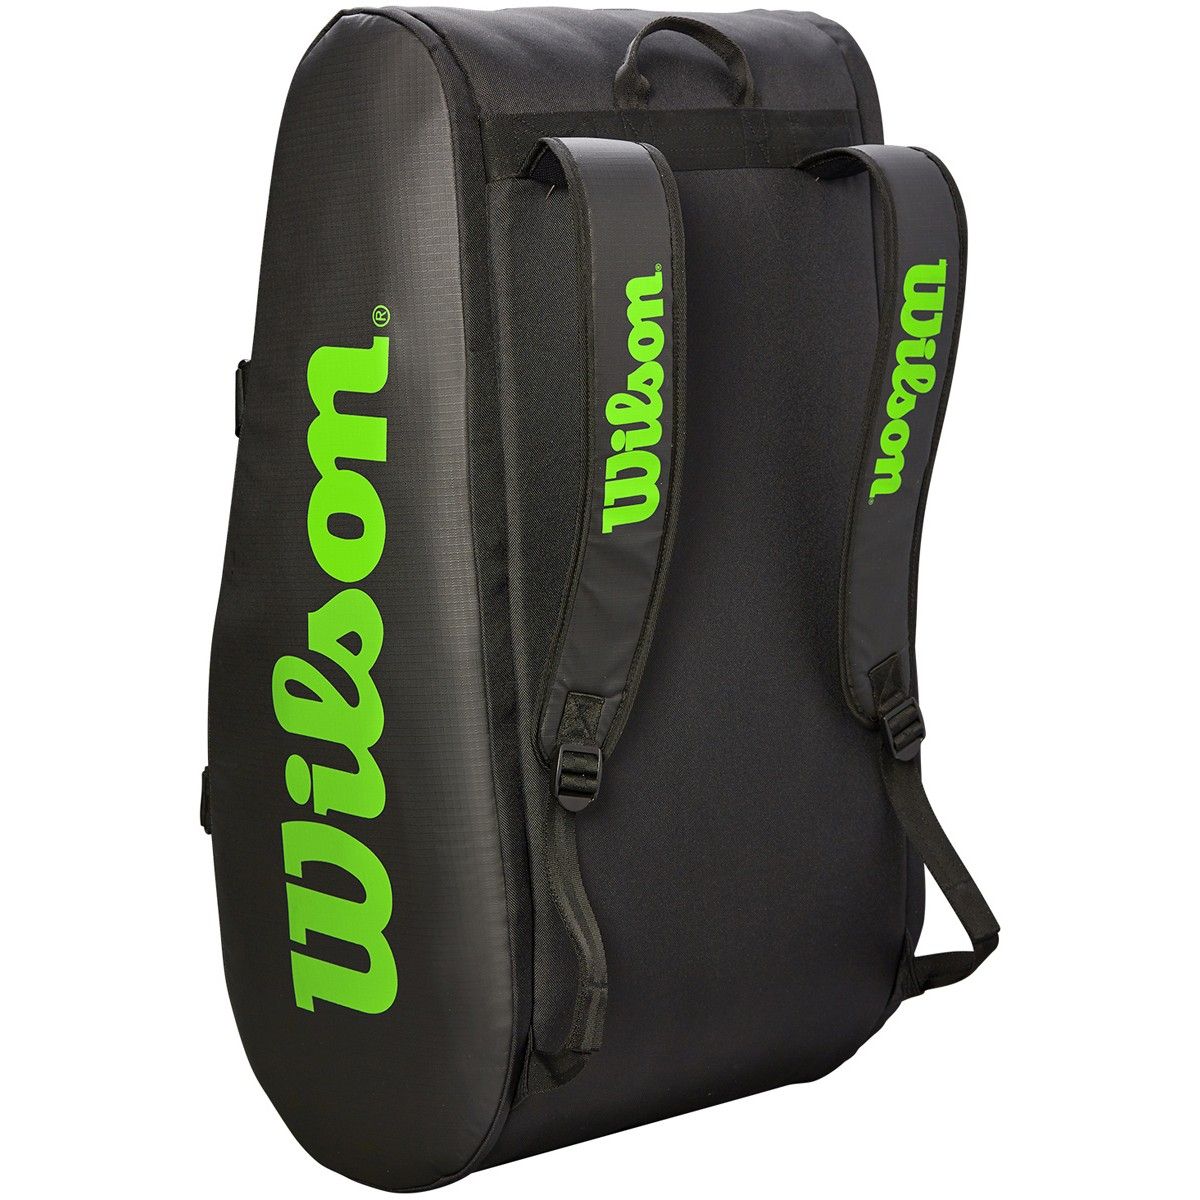 Wilson Blade Duffle Bag Small black/grey/green 2020 